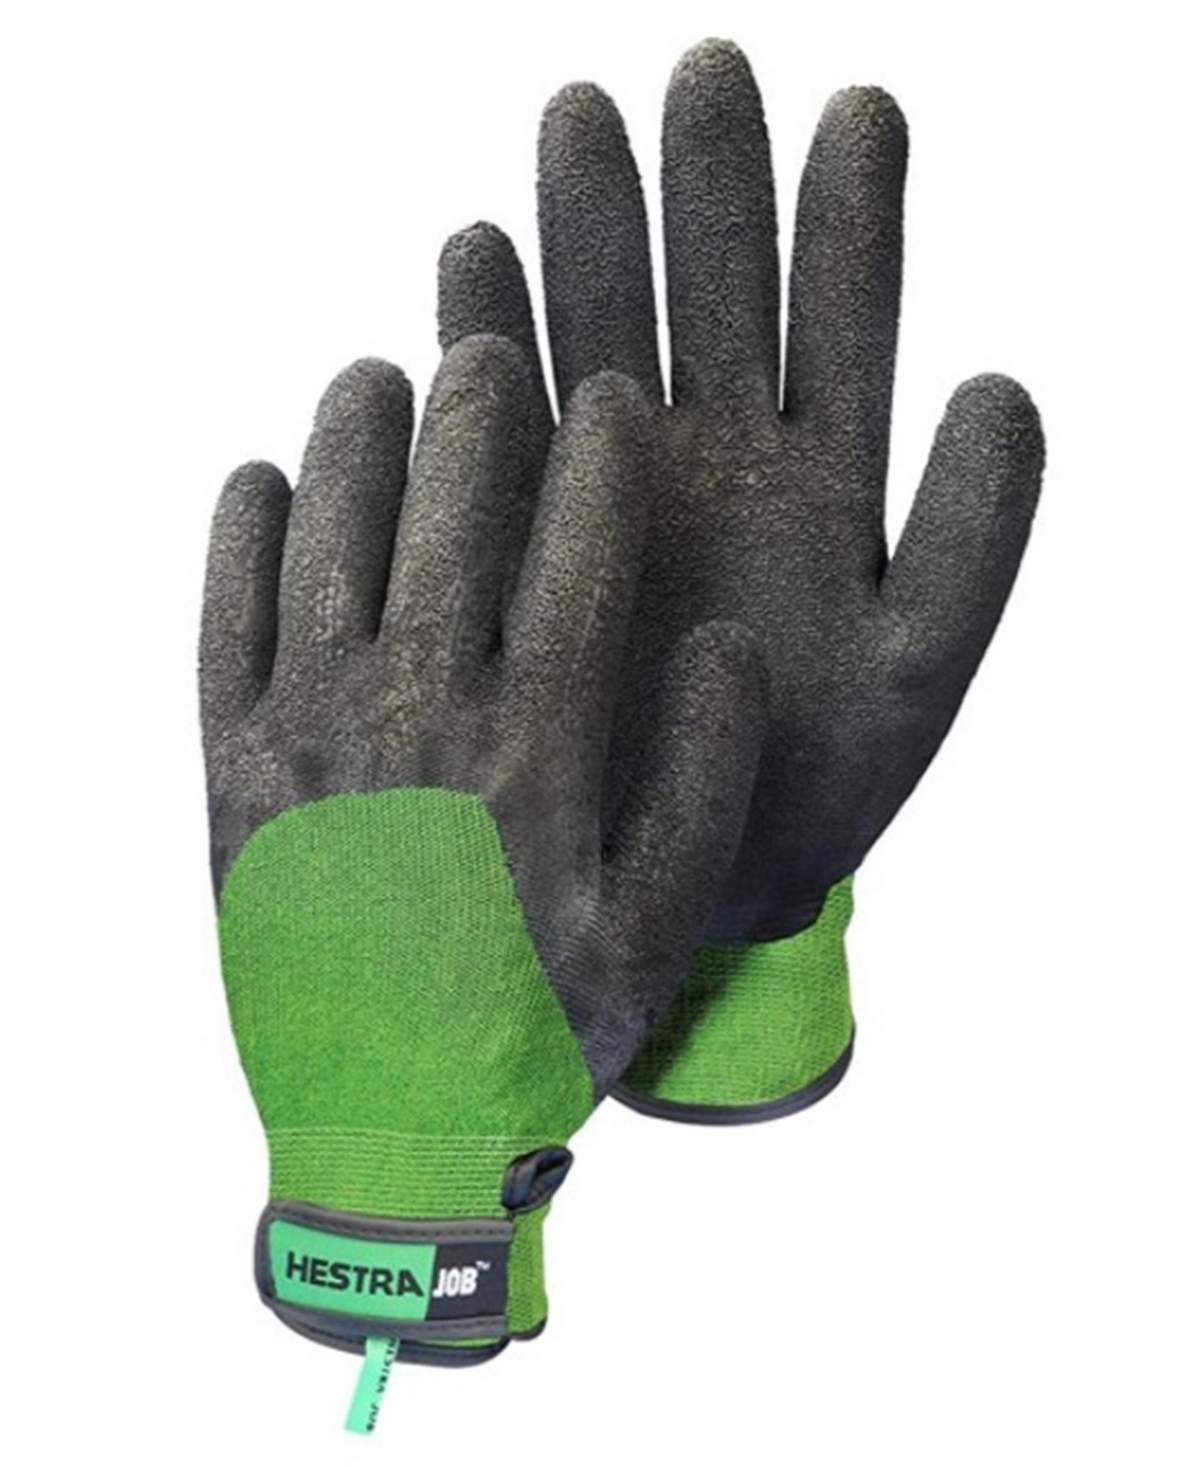 Gardening Work: Men's Rayon Garden Gloves, Black/Green - Black and Green